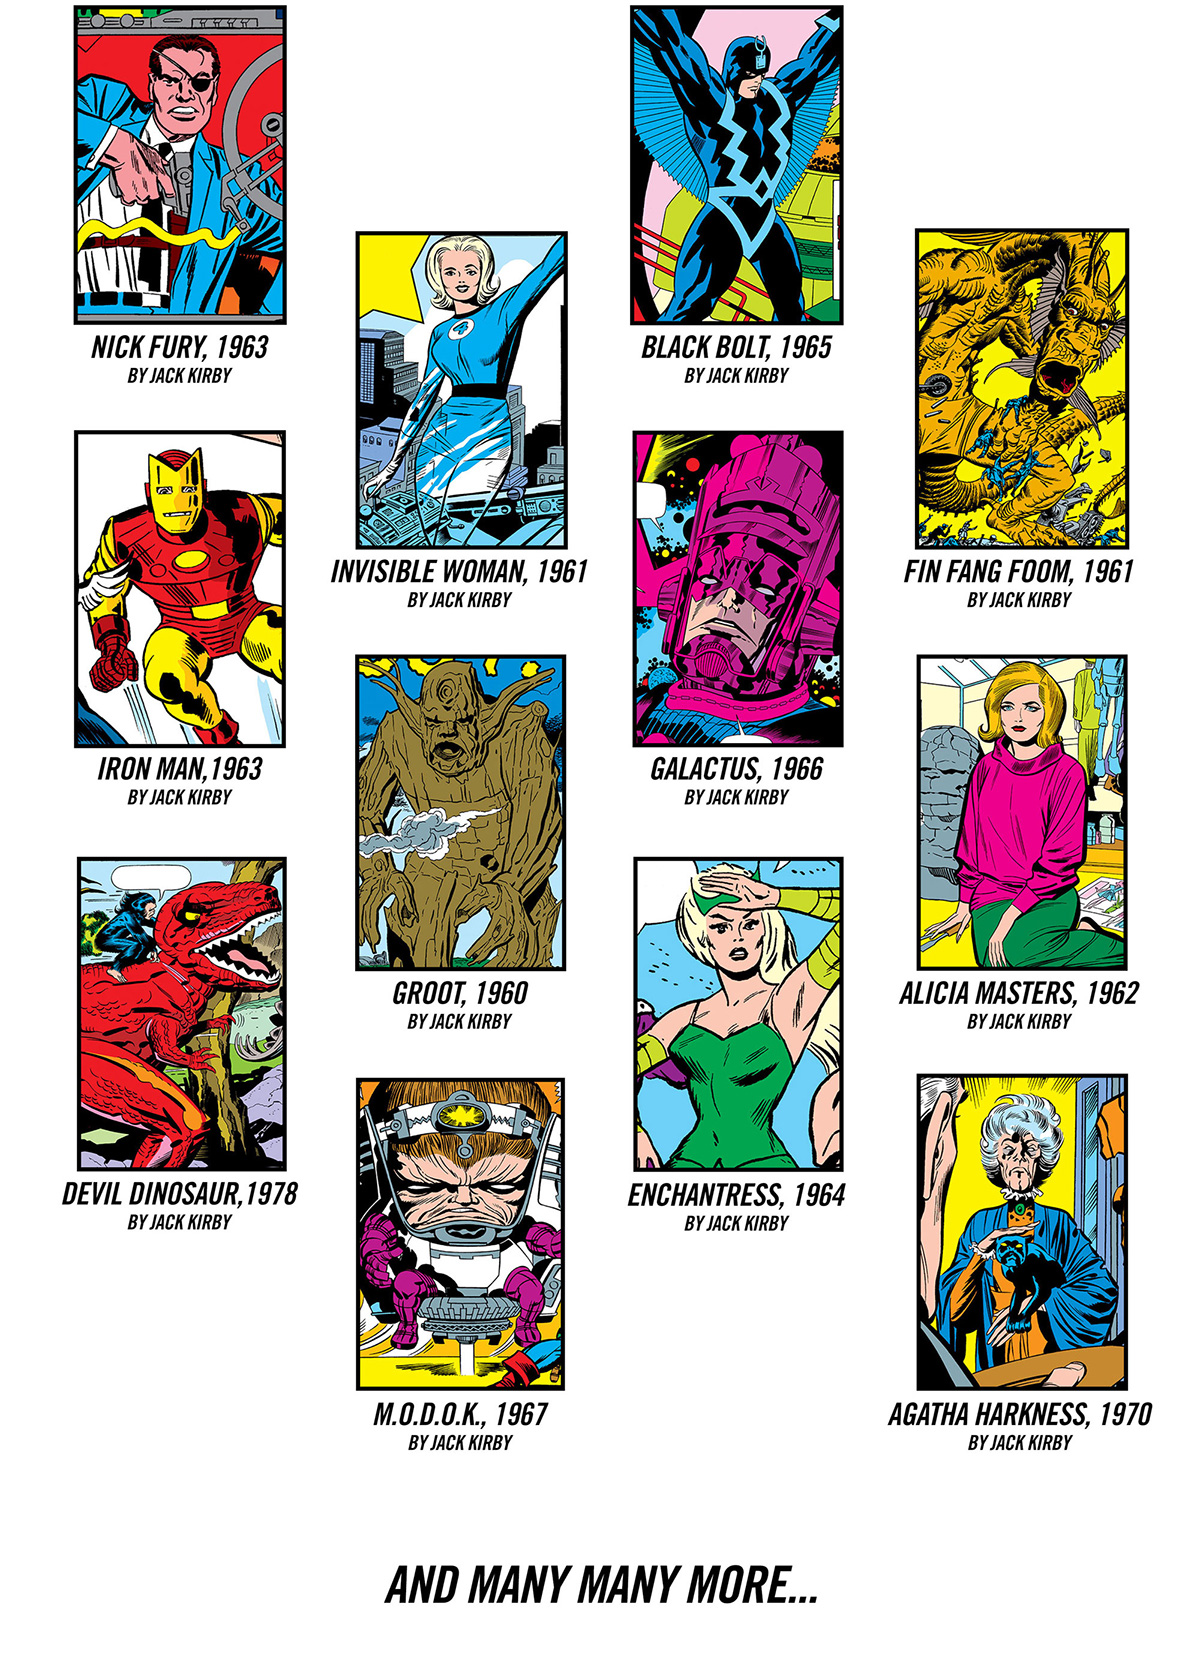 jack kirby marvel comics legend captain america Thor Hulk black panther disney king